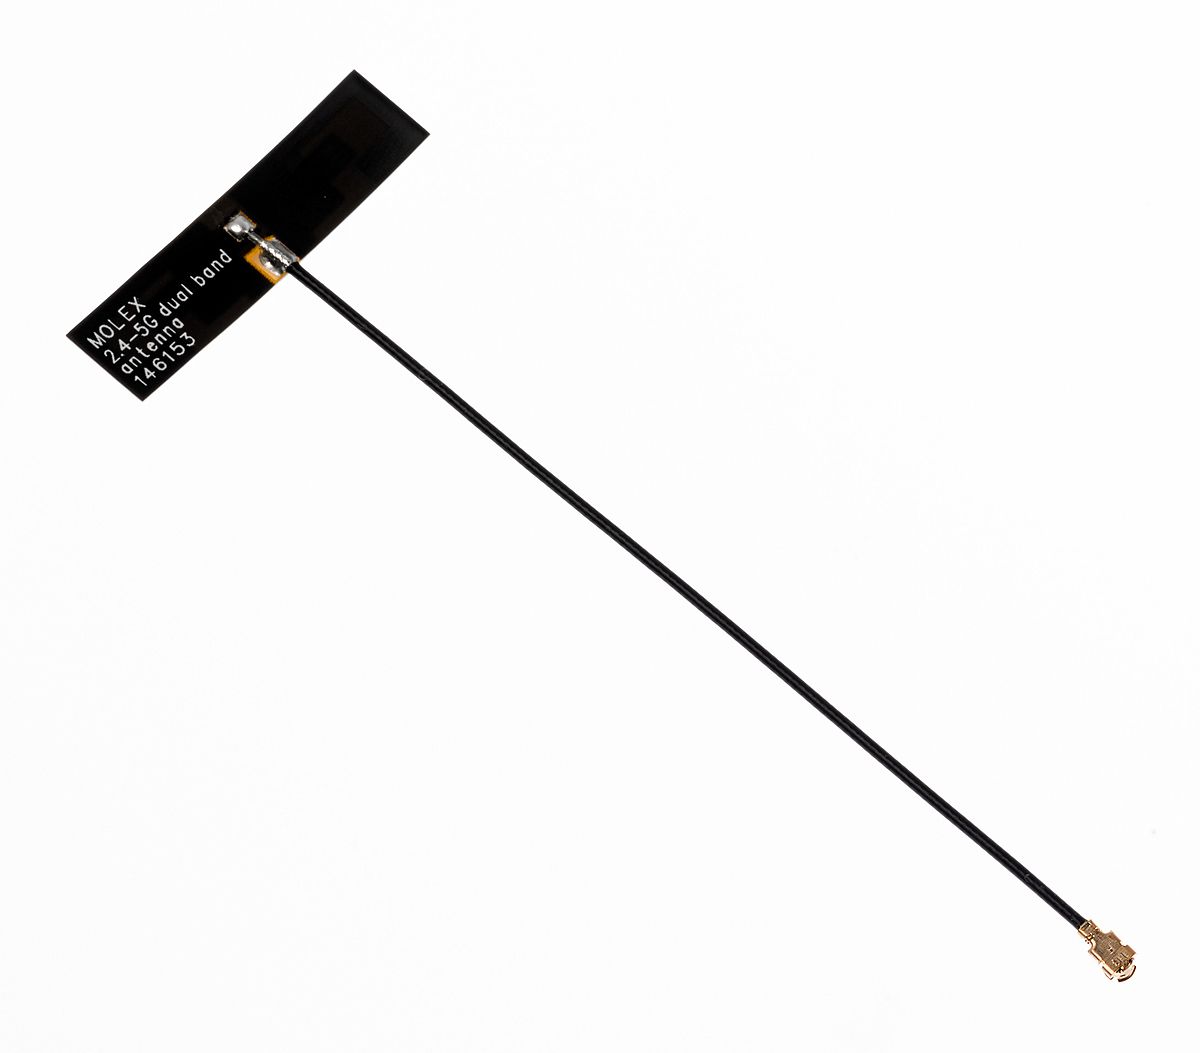 Molex 146153-0100 PCB WiFi Antenna with Micro-Coaxial RF Connector, 4G (LTE), WiFi (Dual Band)